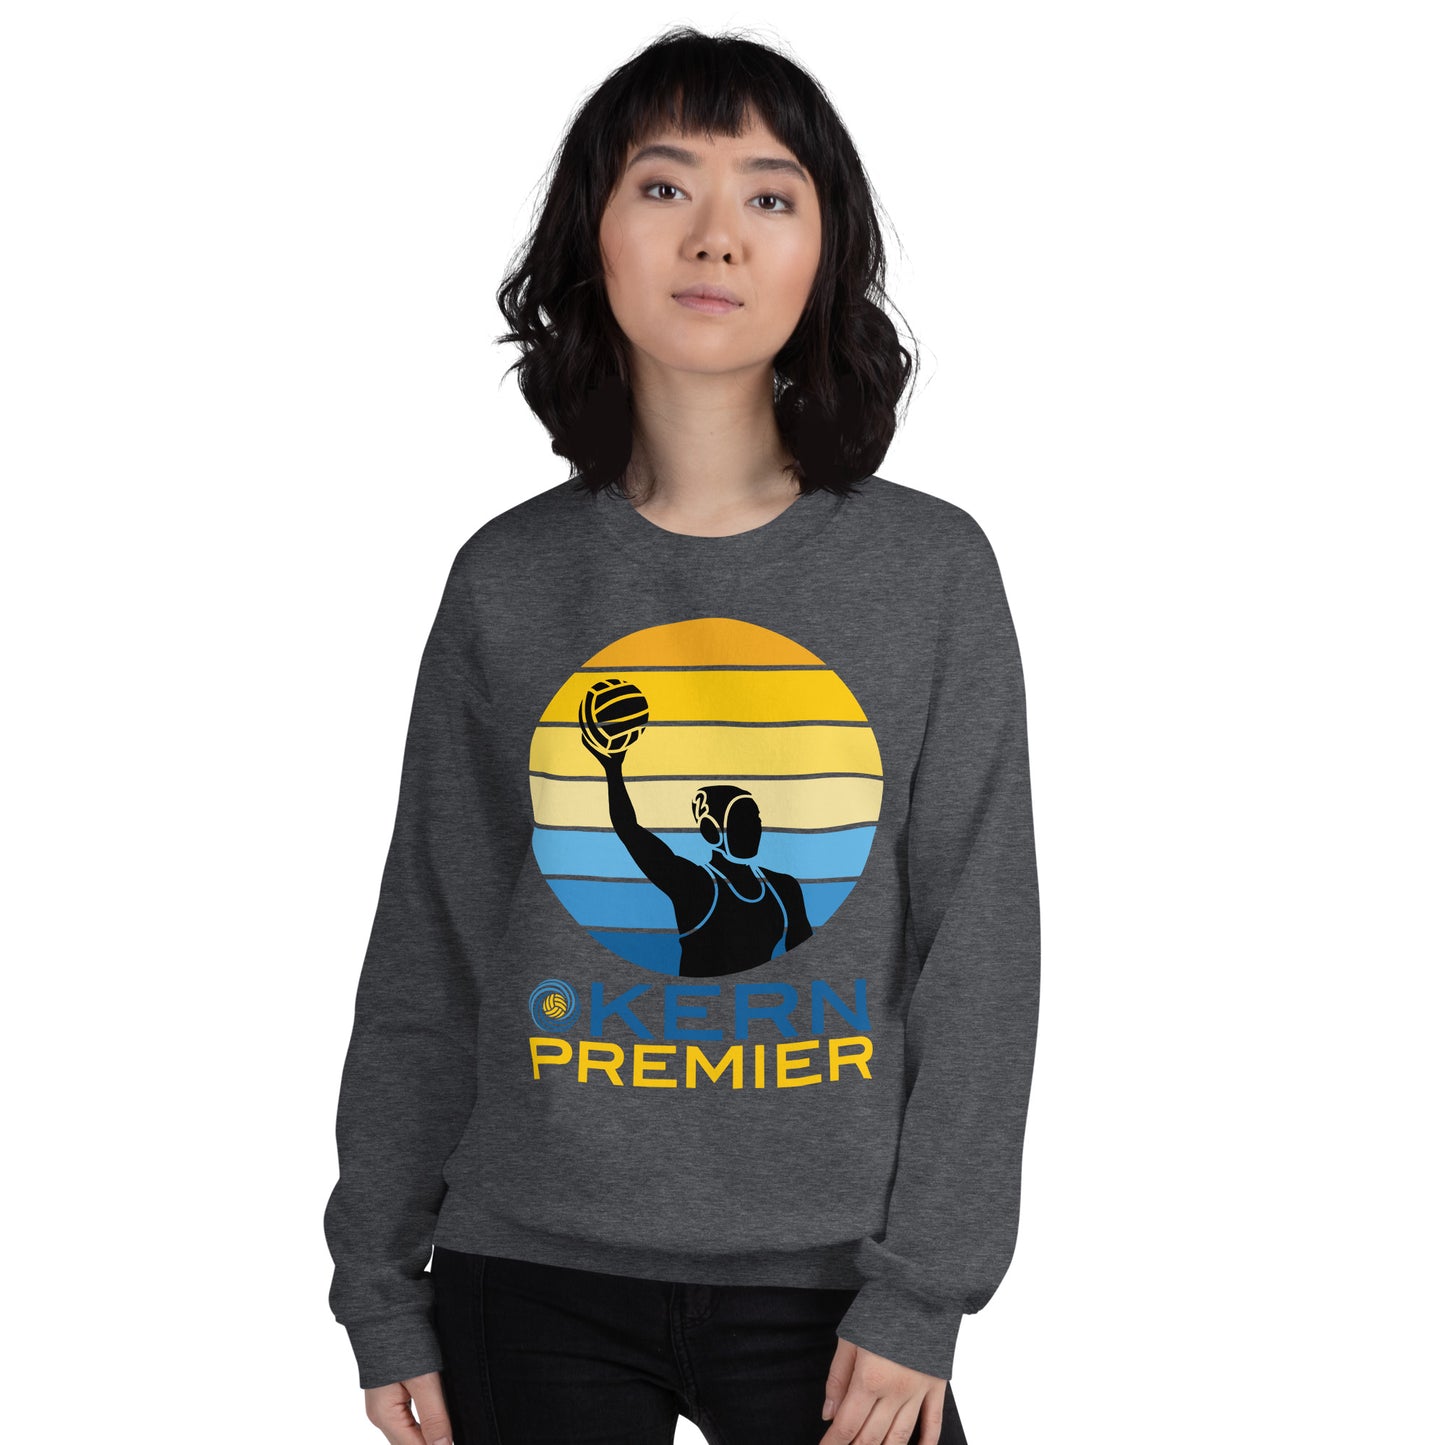 Kern Premier - 7 Color Circle with Female Silhouette with Logo on Bottom - Unisex Crew Neck Sweatshirt - Gildan 18000